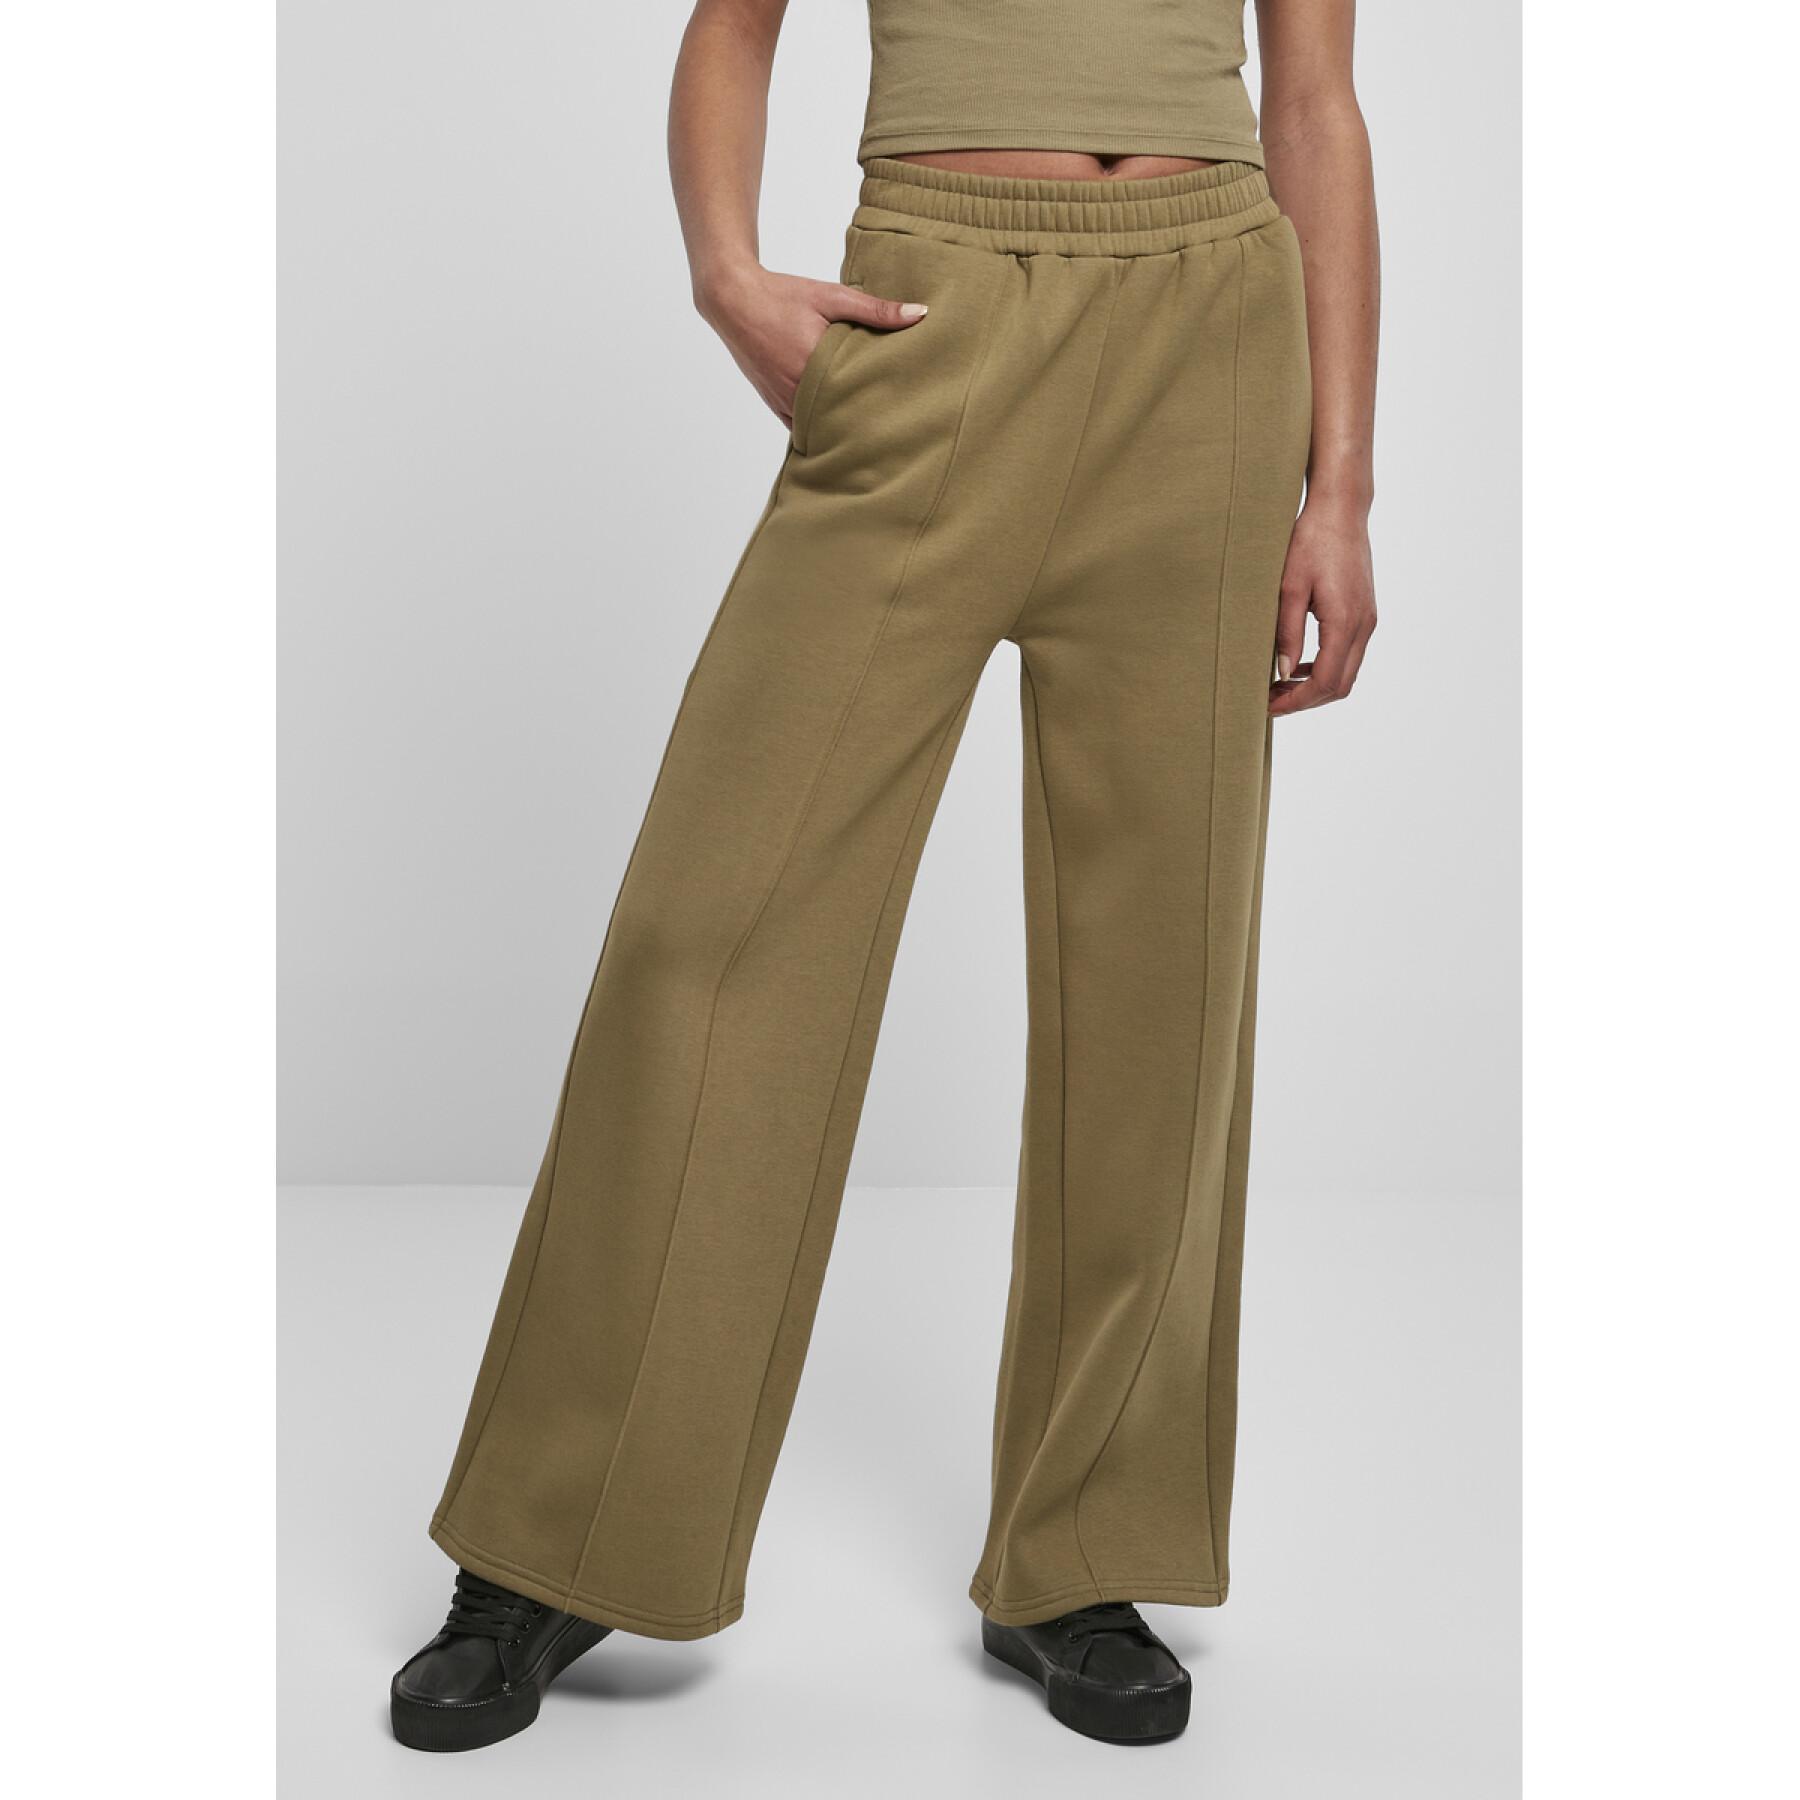 Women's trousers Urban Classics straight pin tuck